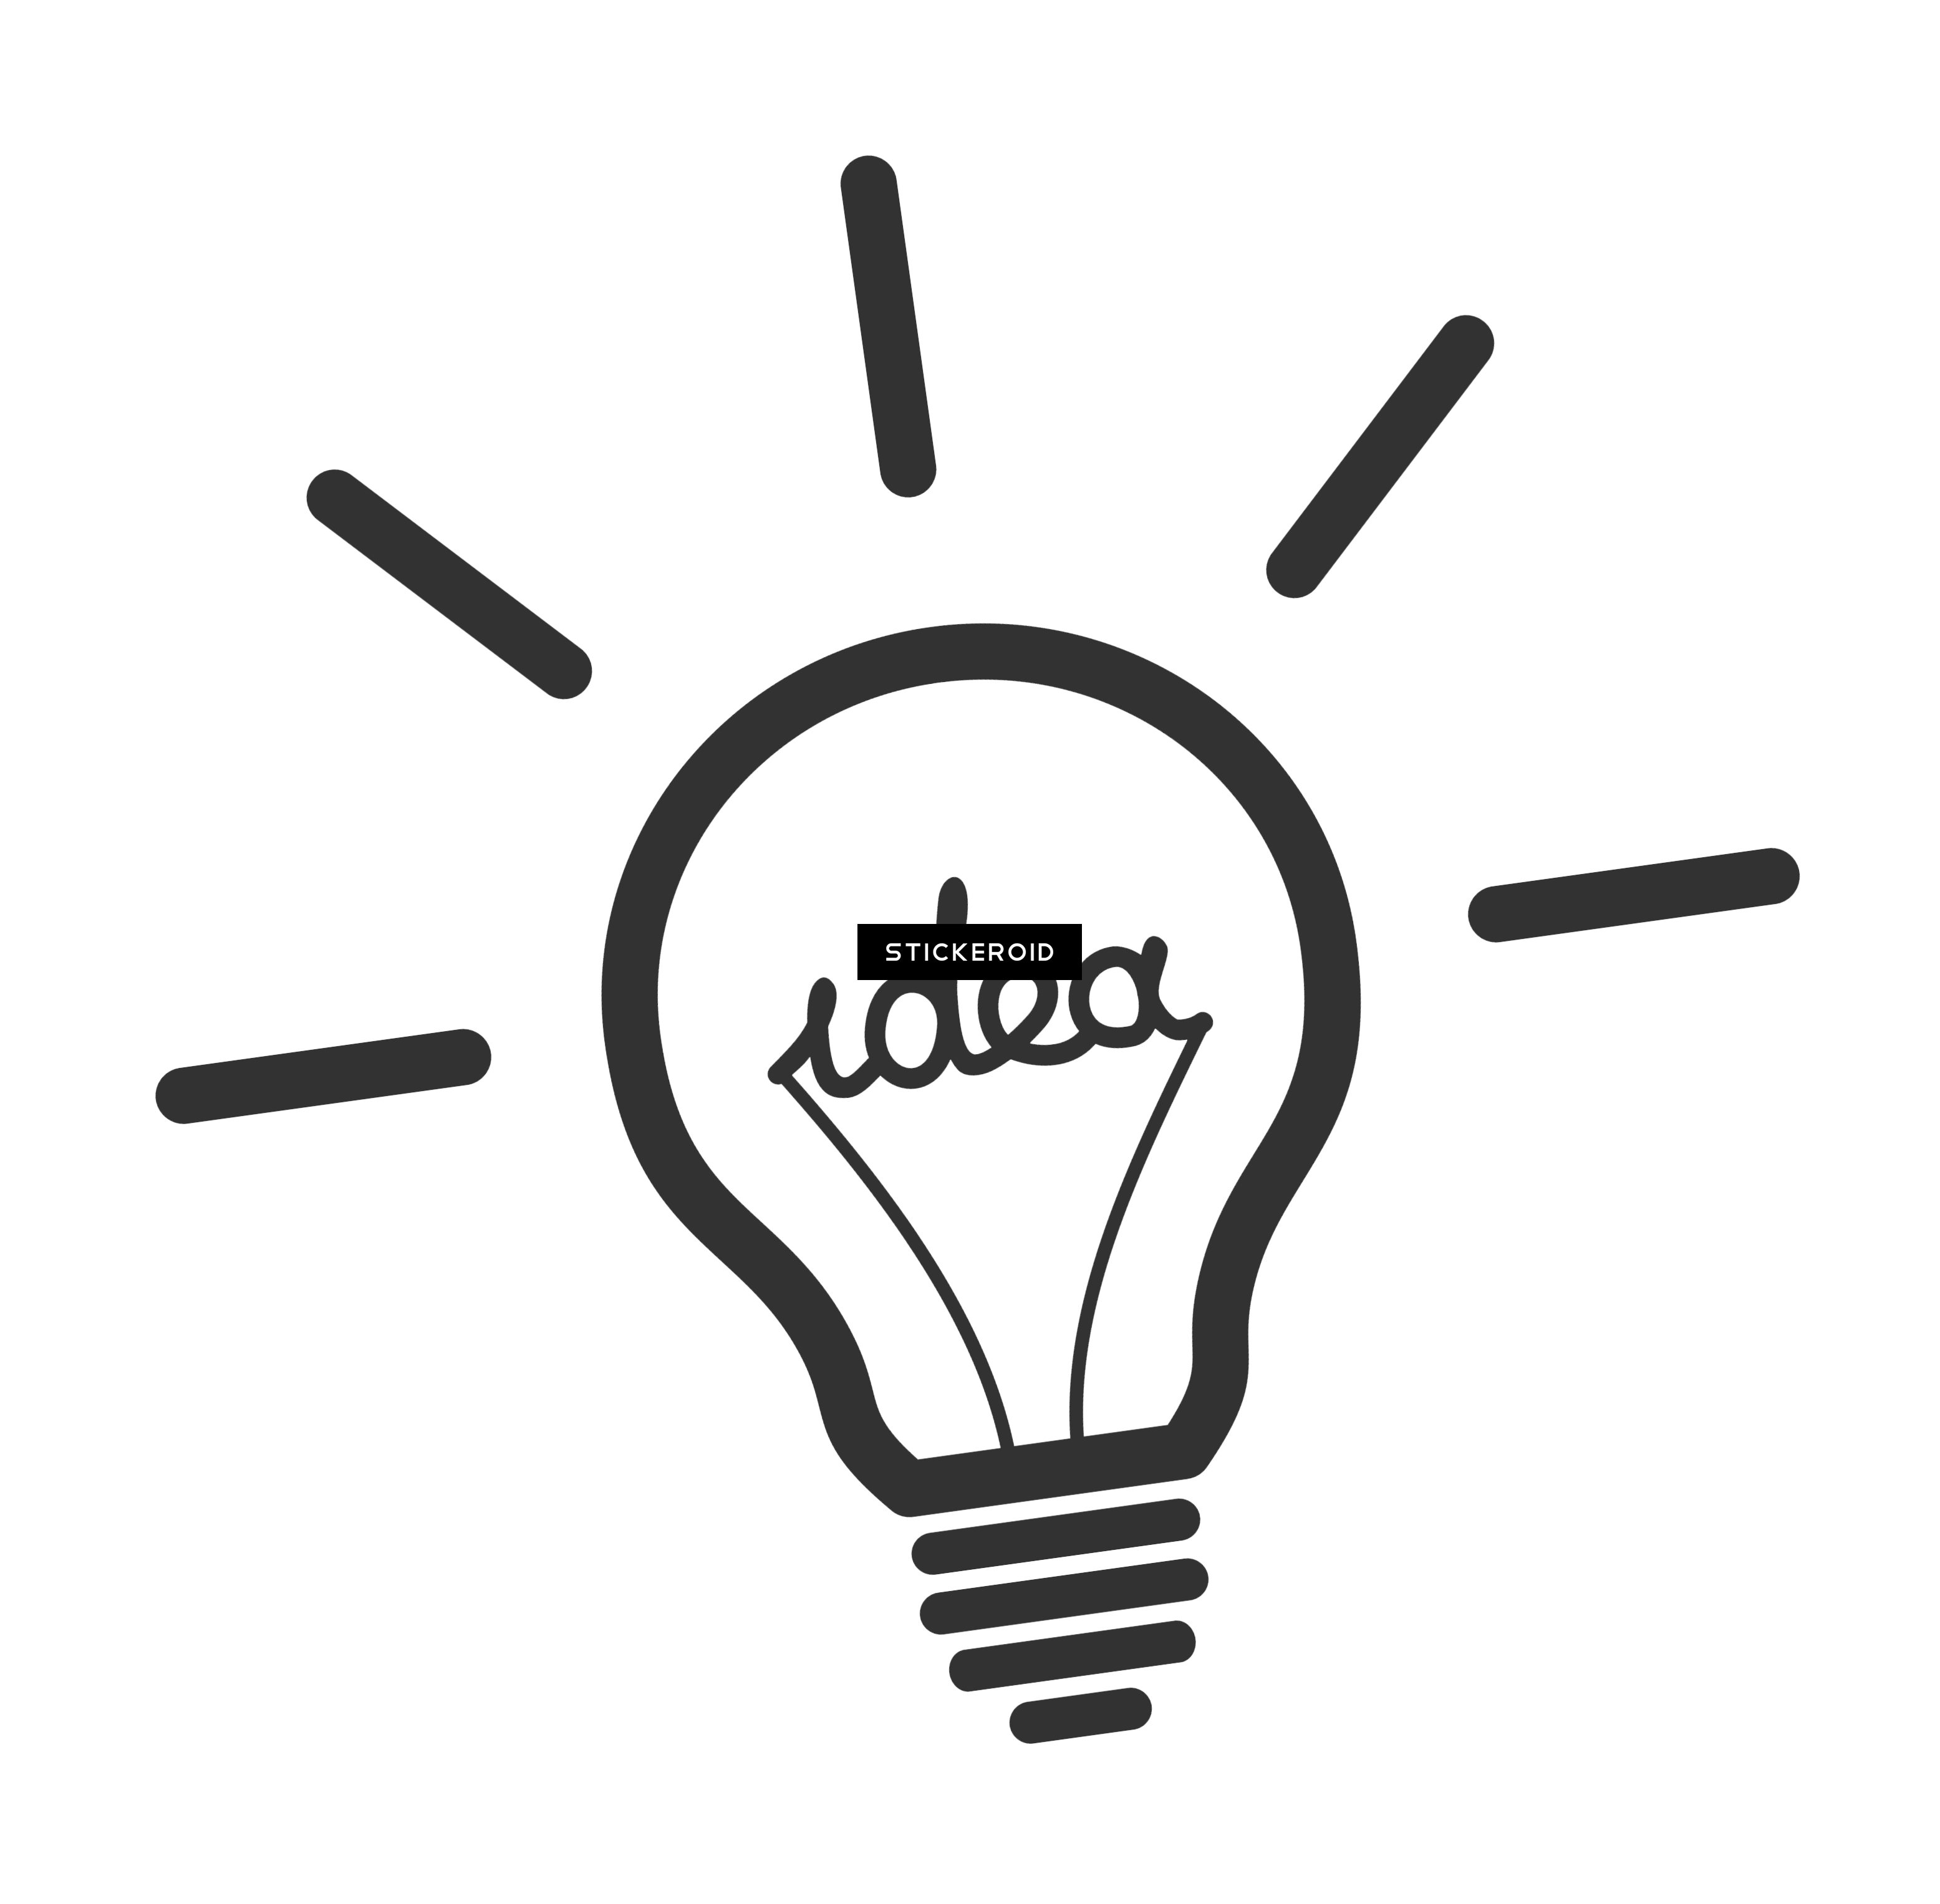 Lightbulb Idea Concept Sketch